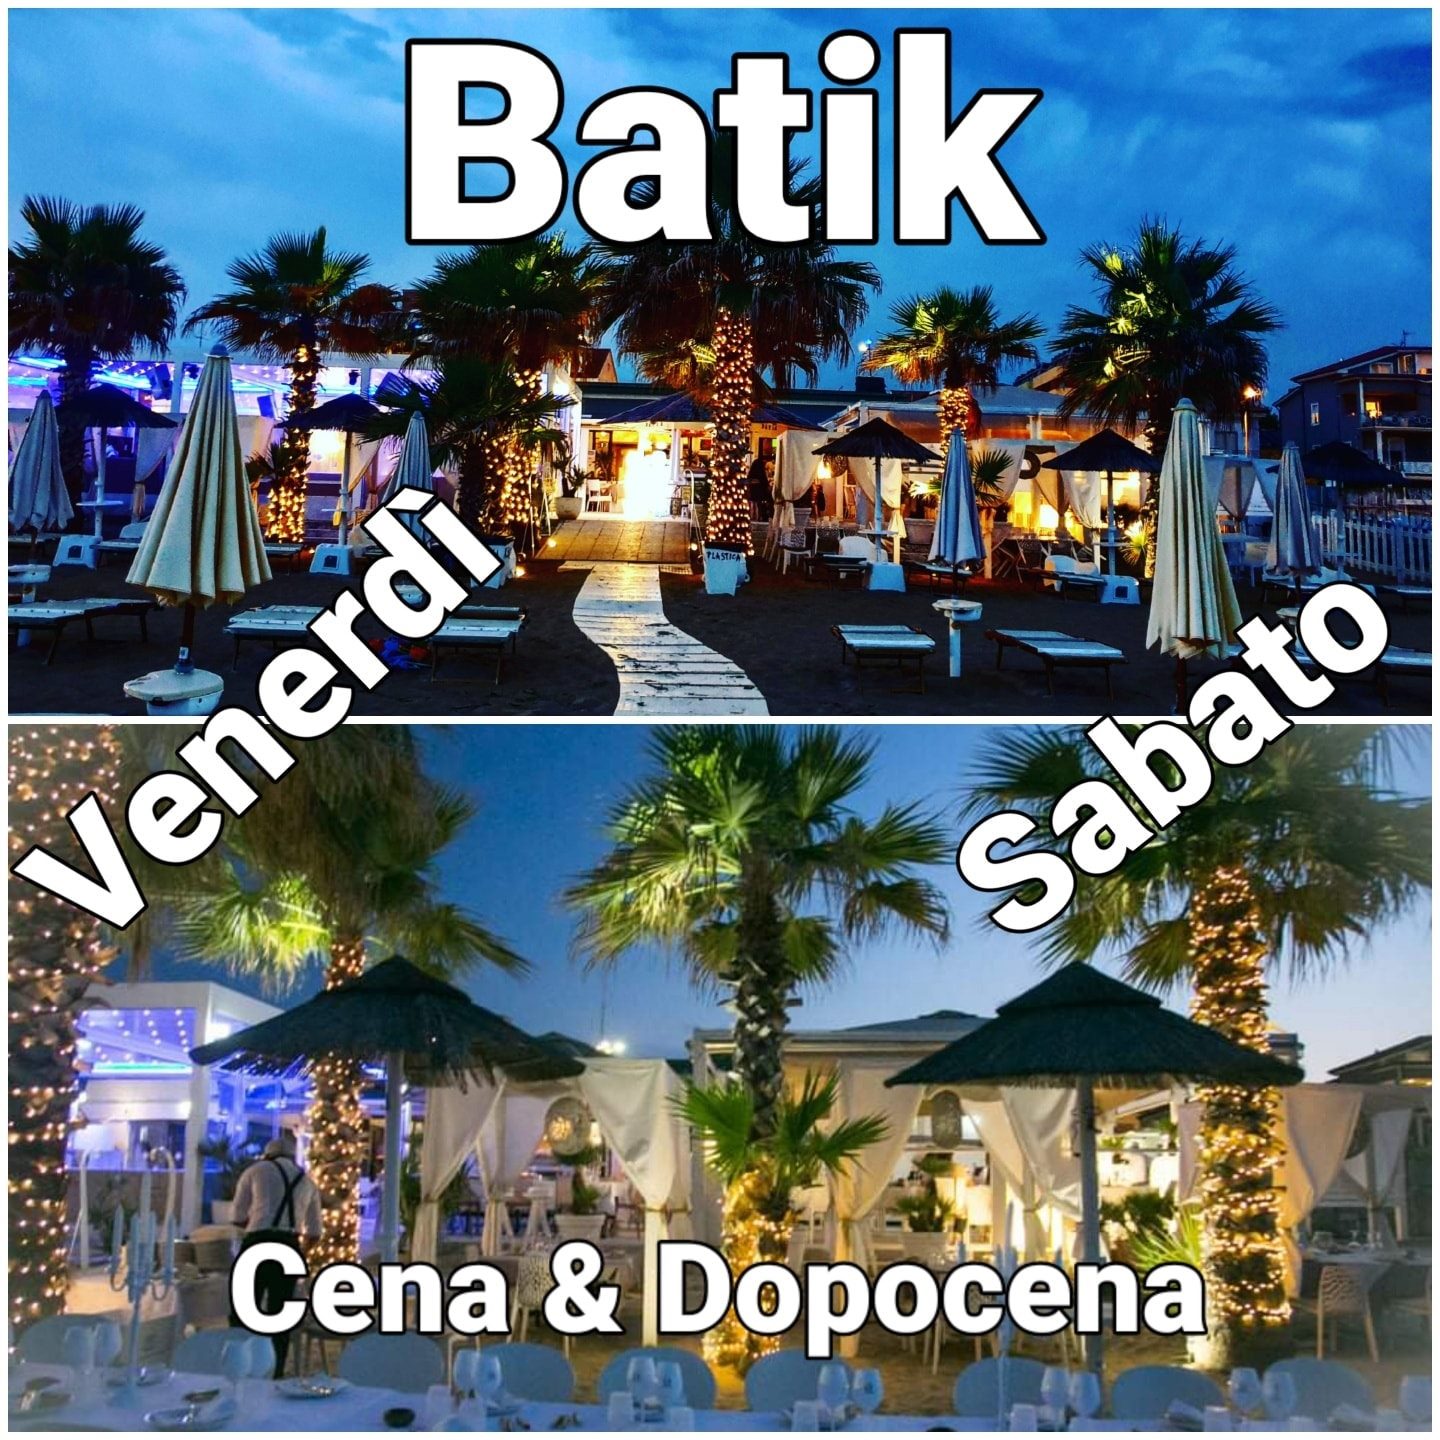 Batik Civitanova Marche, cena e dopocena cocktail bar